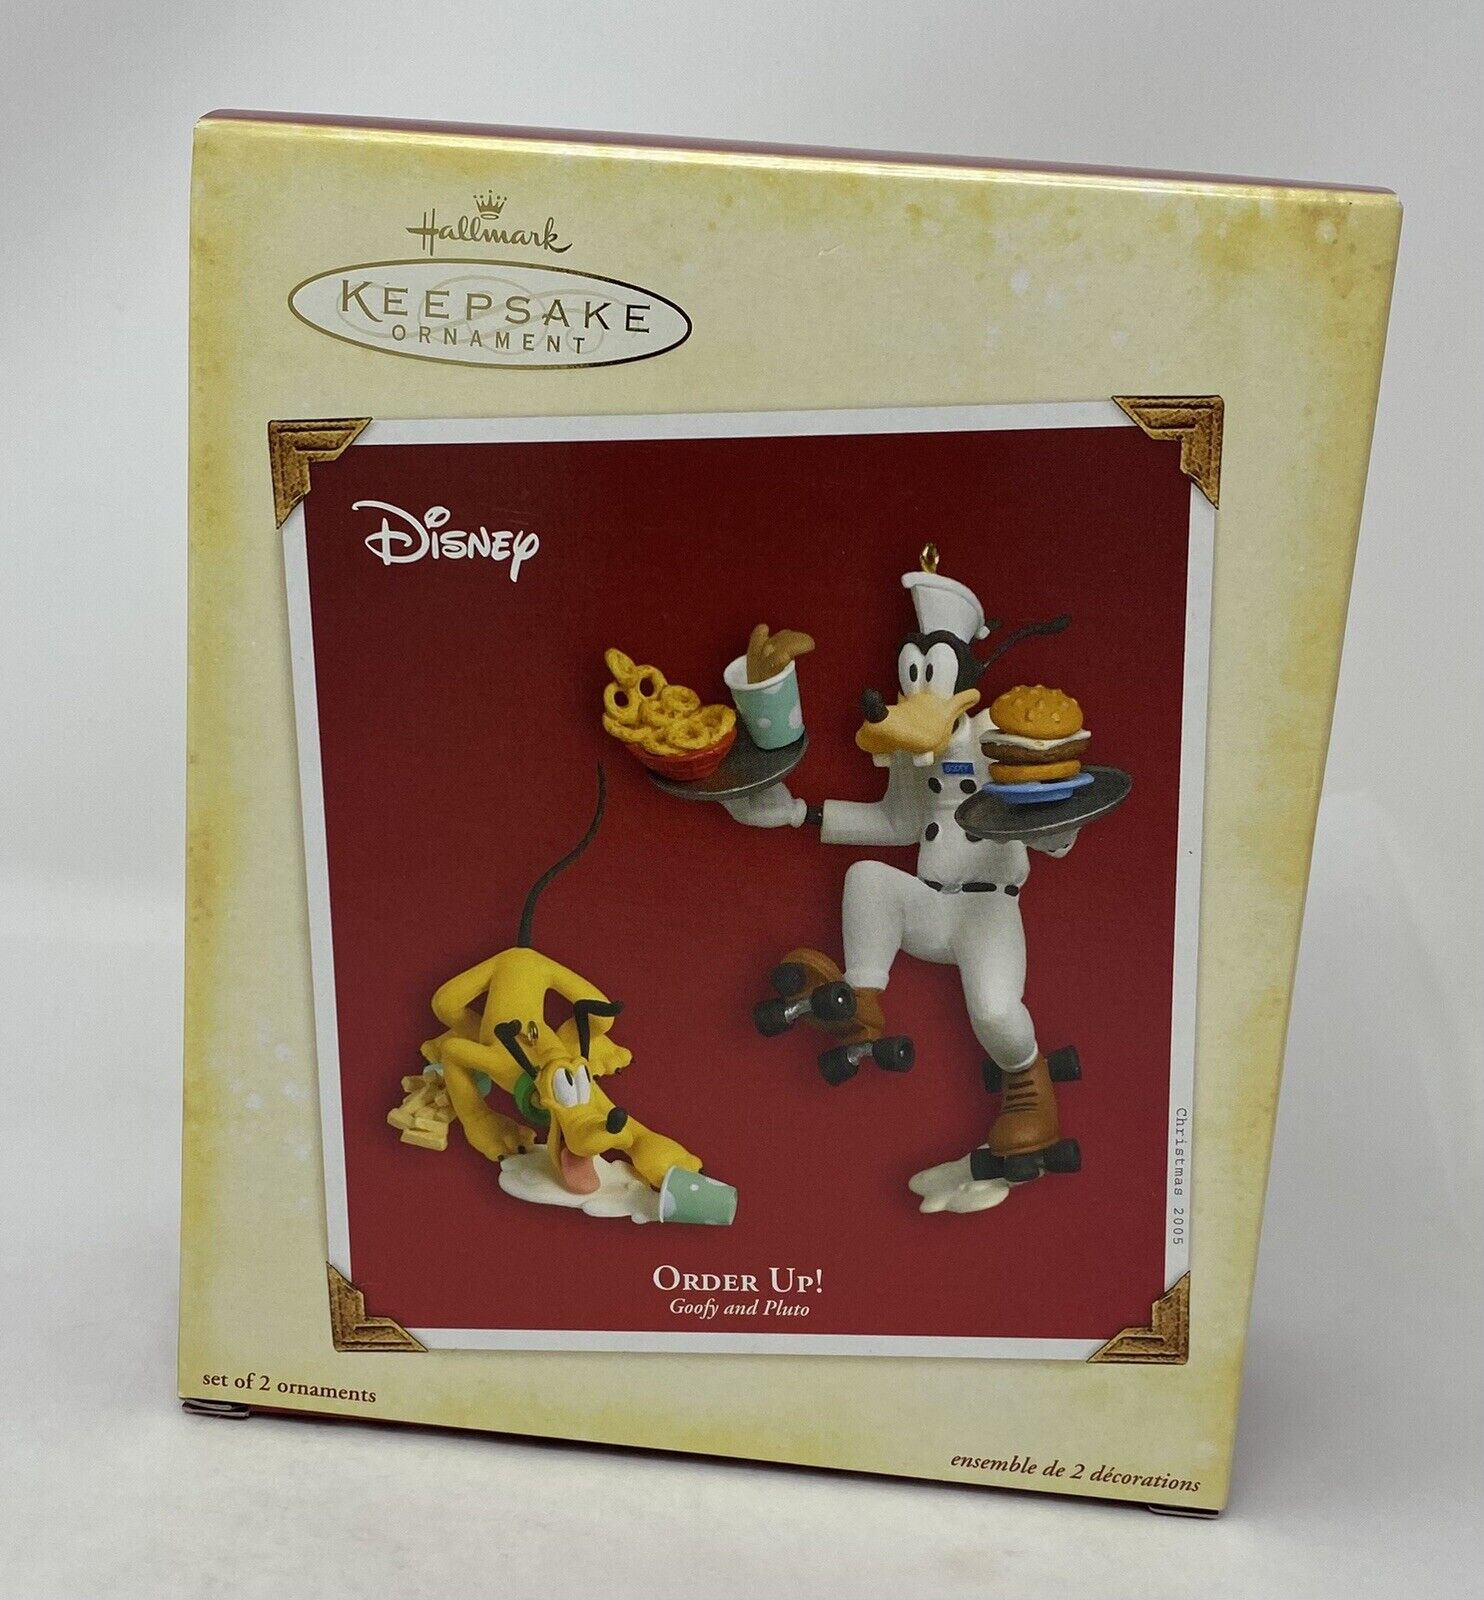 Hallmark Keepsake Ornaments Disney Goofy and Pluto Order Up 2005